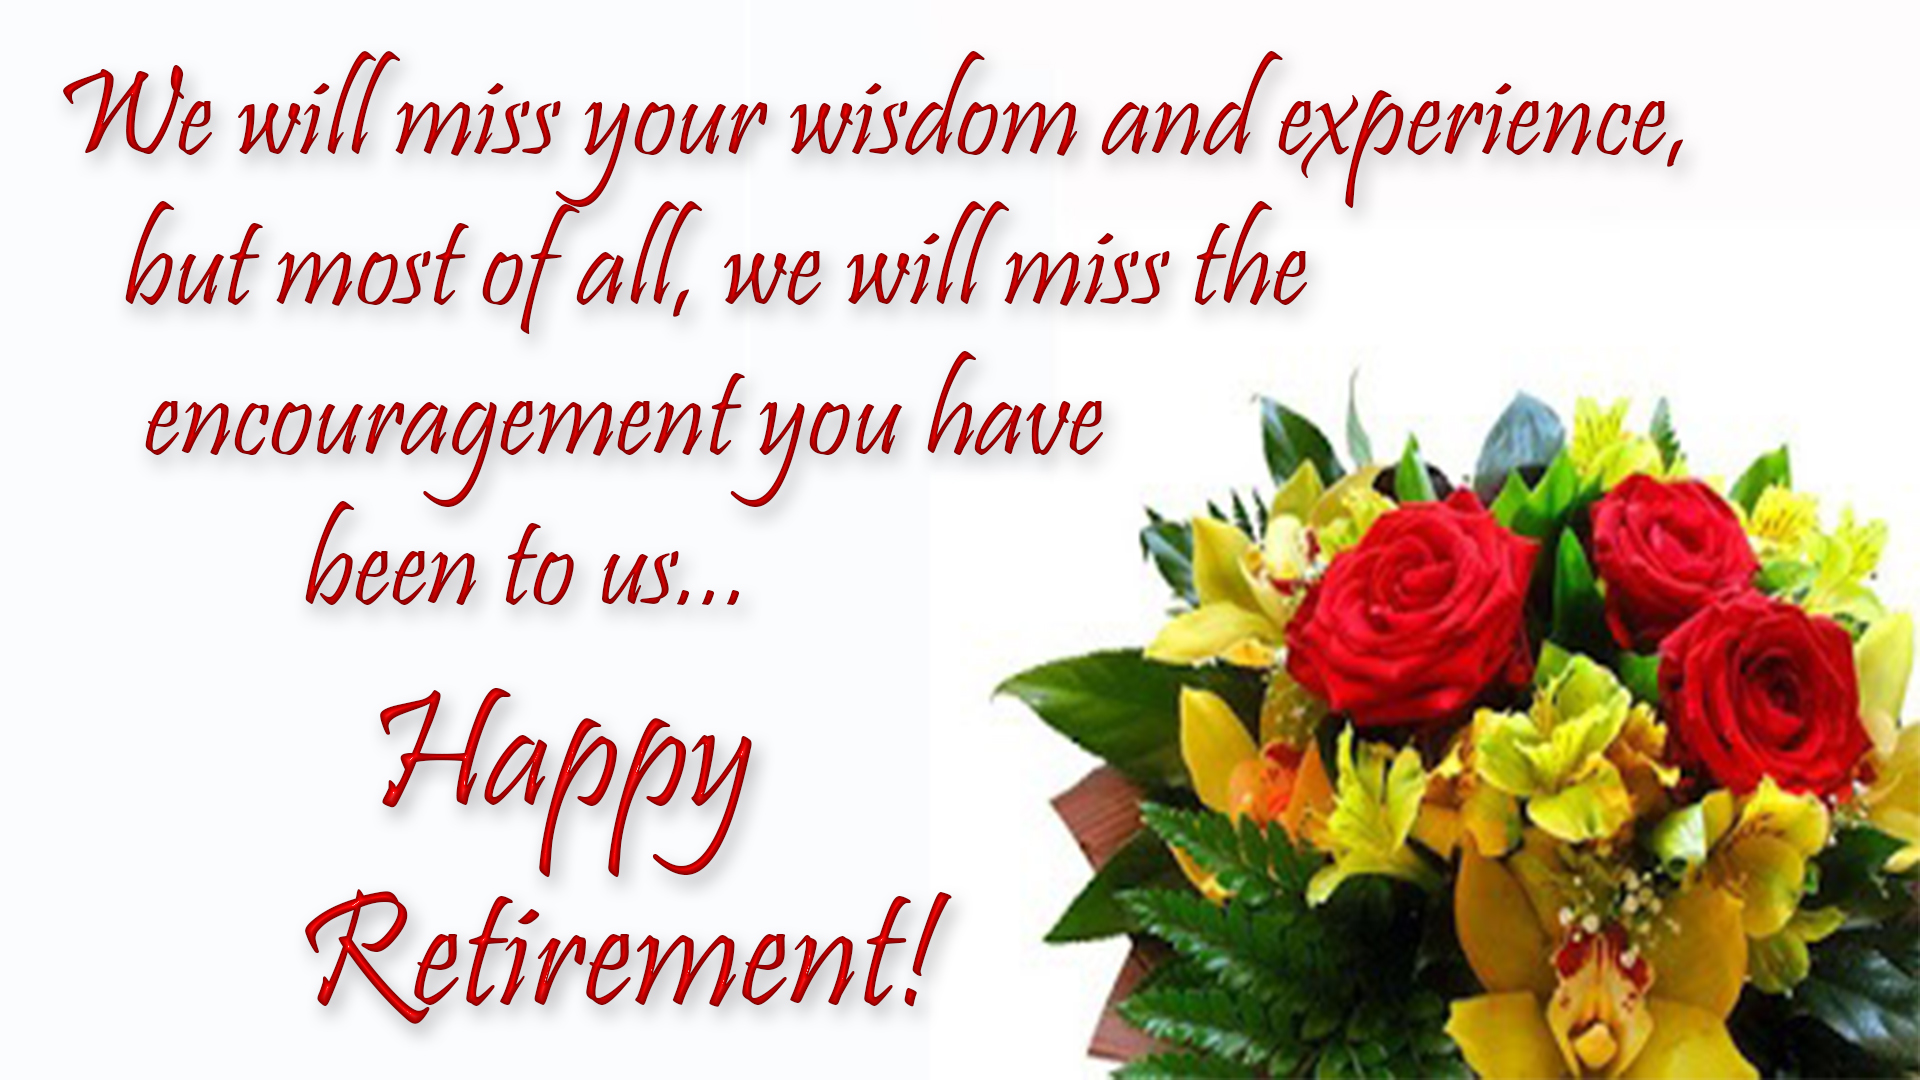 happy retirement wishes image